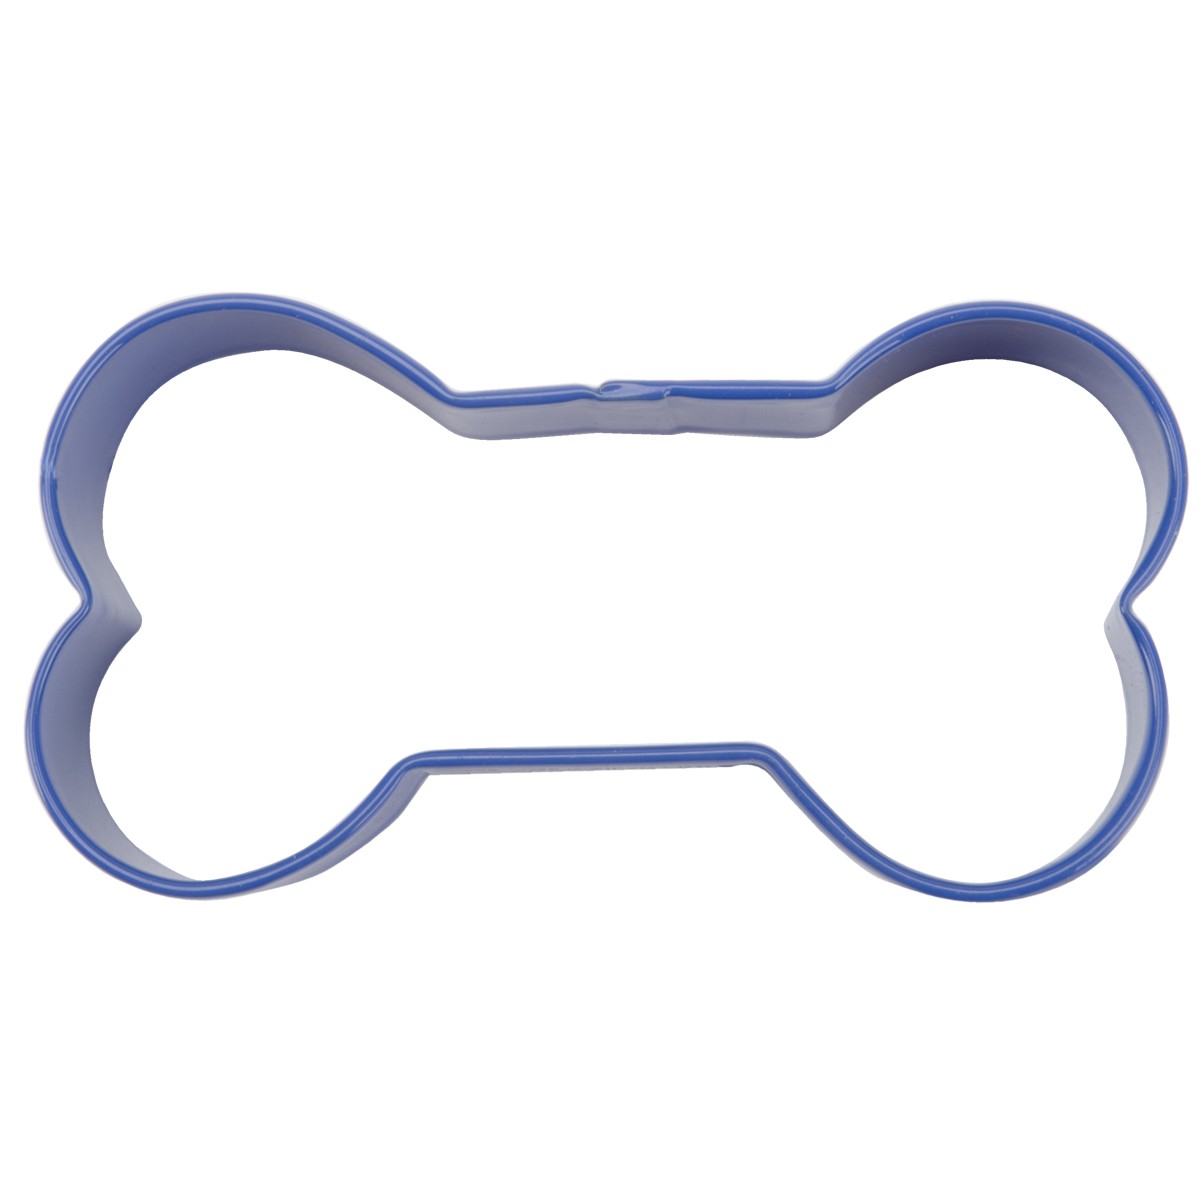 Dog bone chew clip art images free clipart image 2